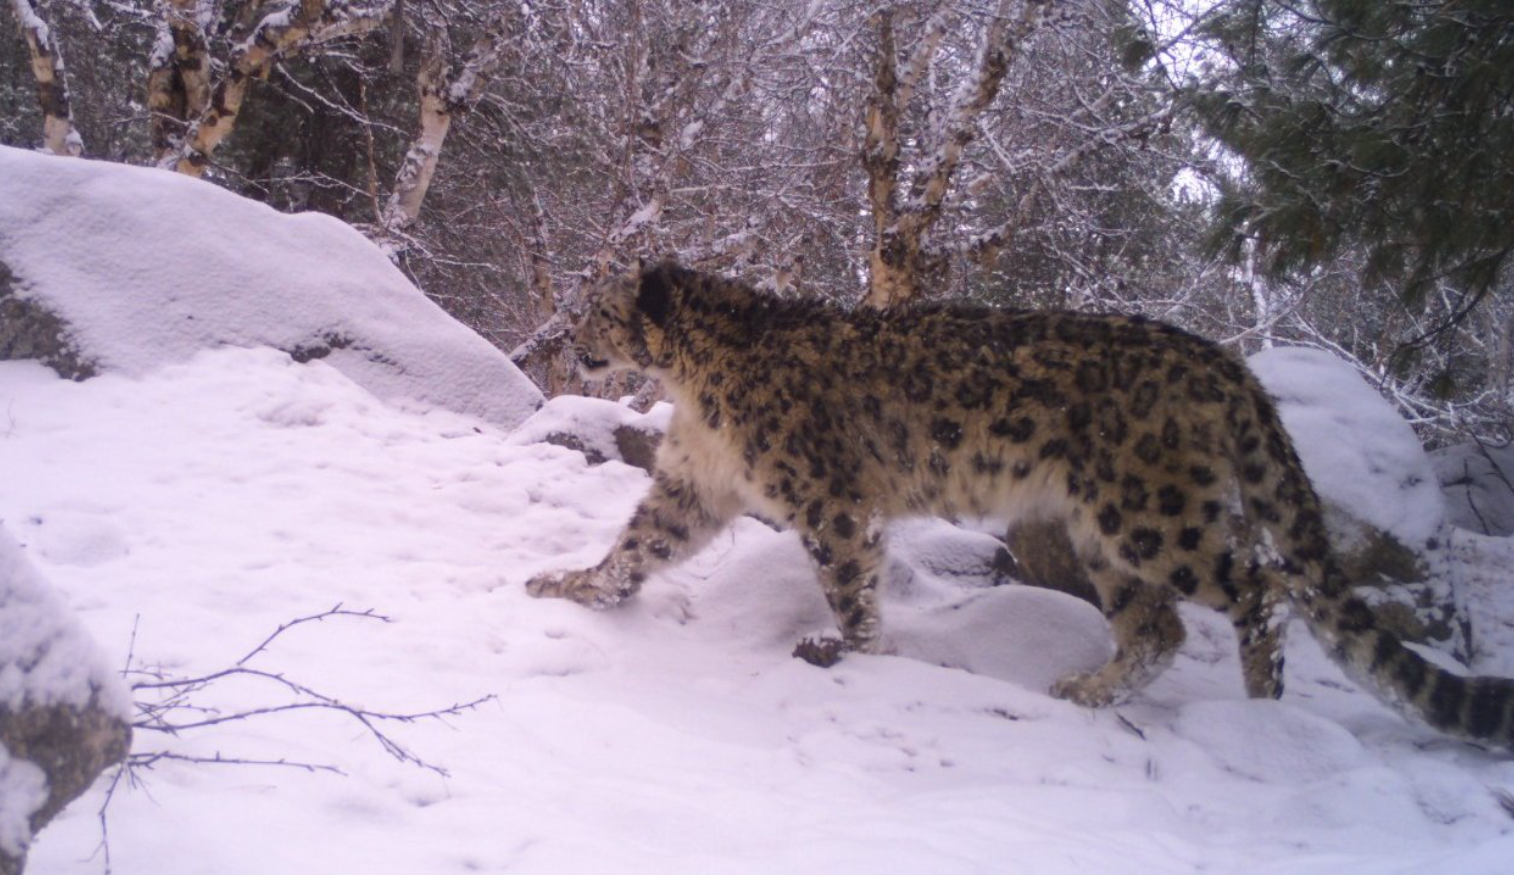 1st Scientific Exercise Finds 718 Snow Leopards In India, Highest In #Ladakh